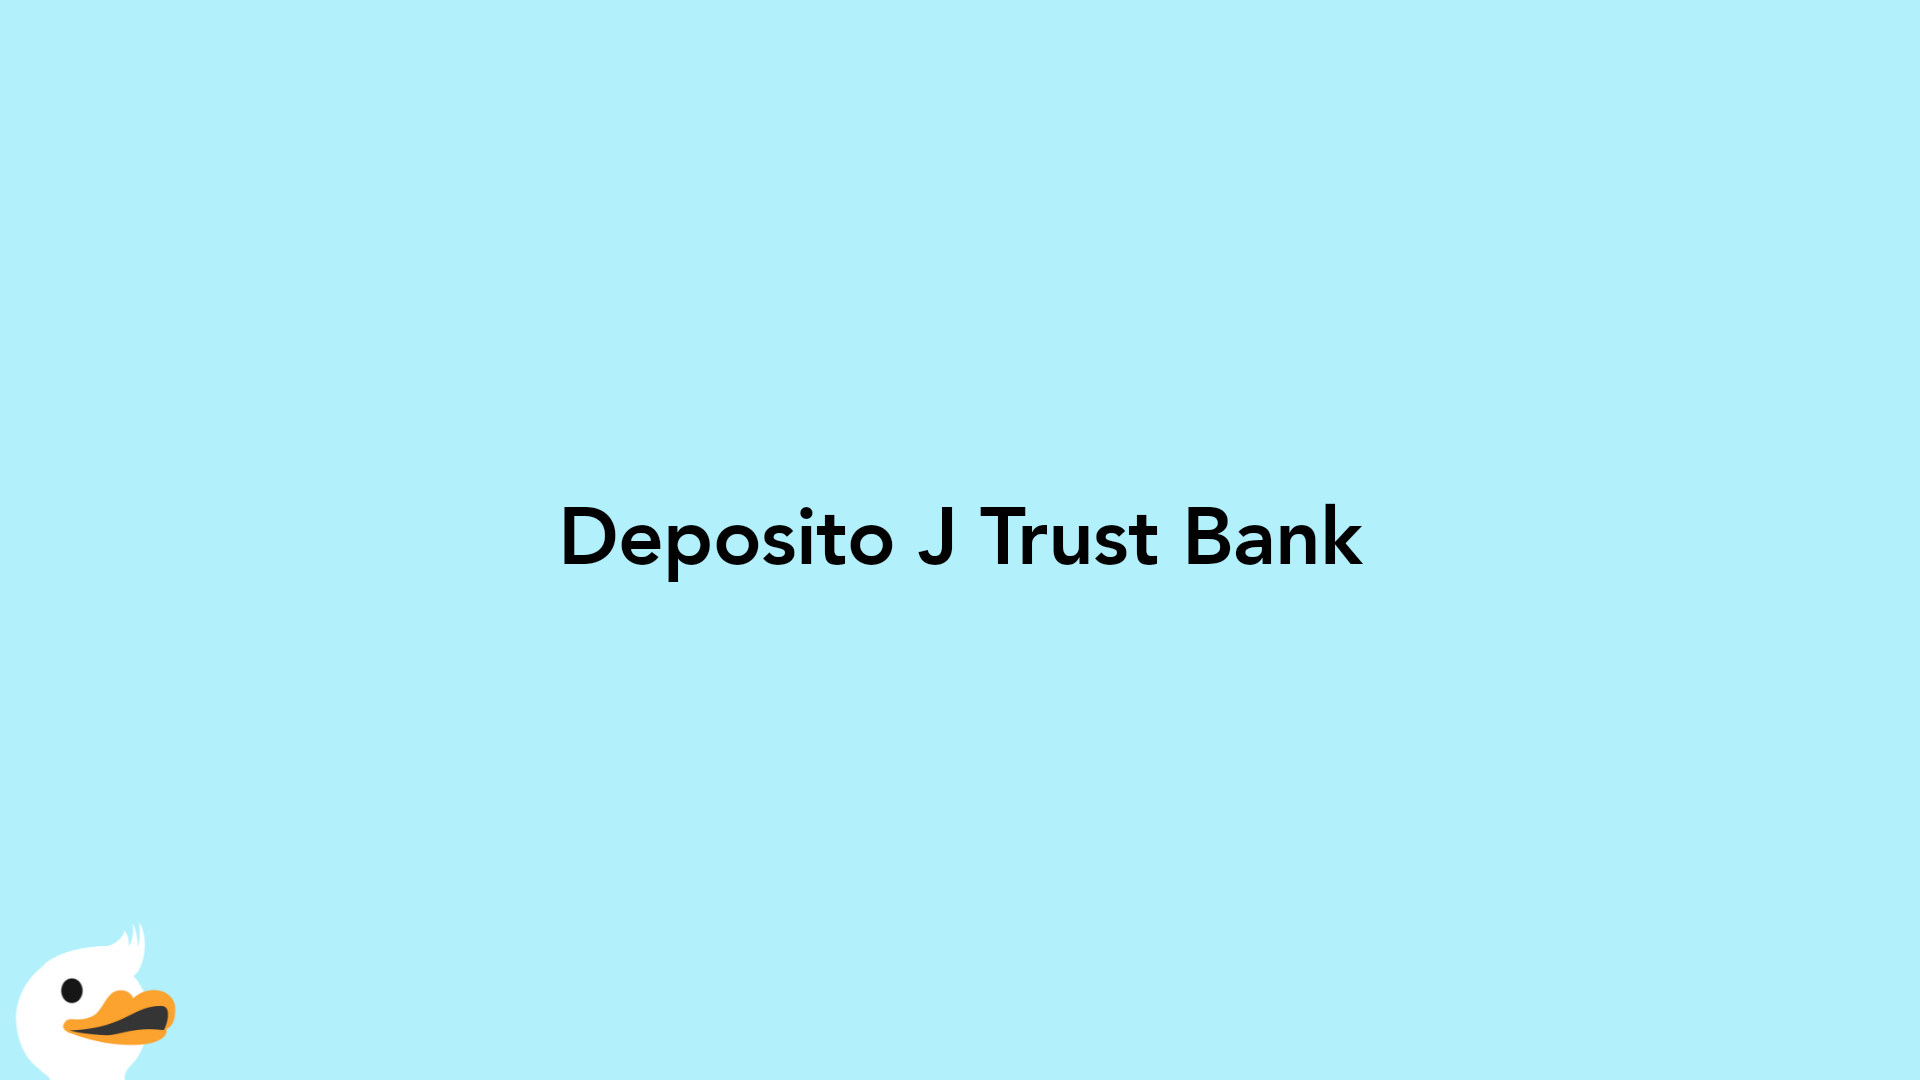 Deposito J Trust Bank